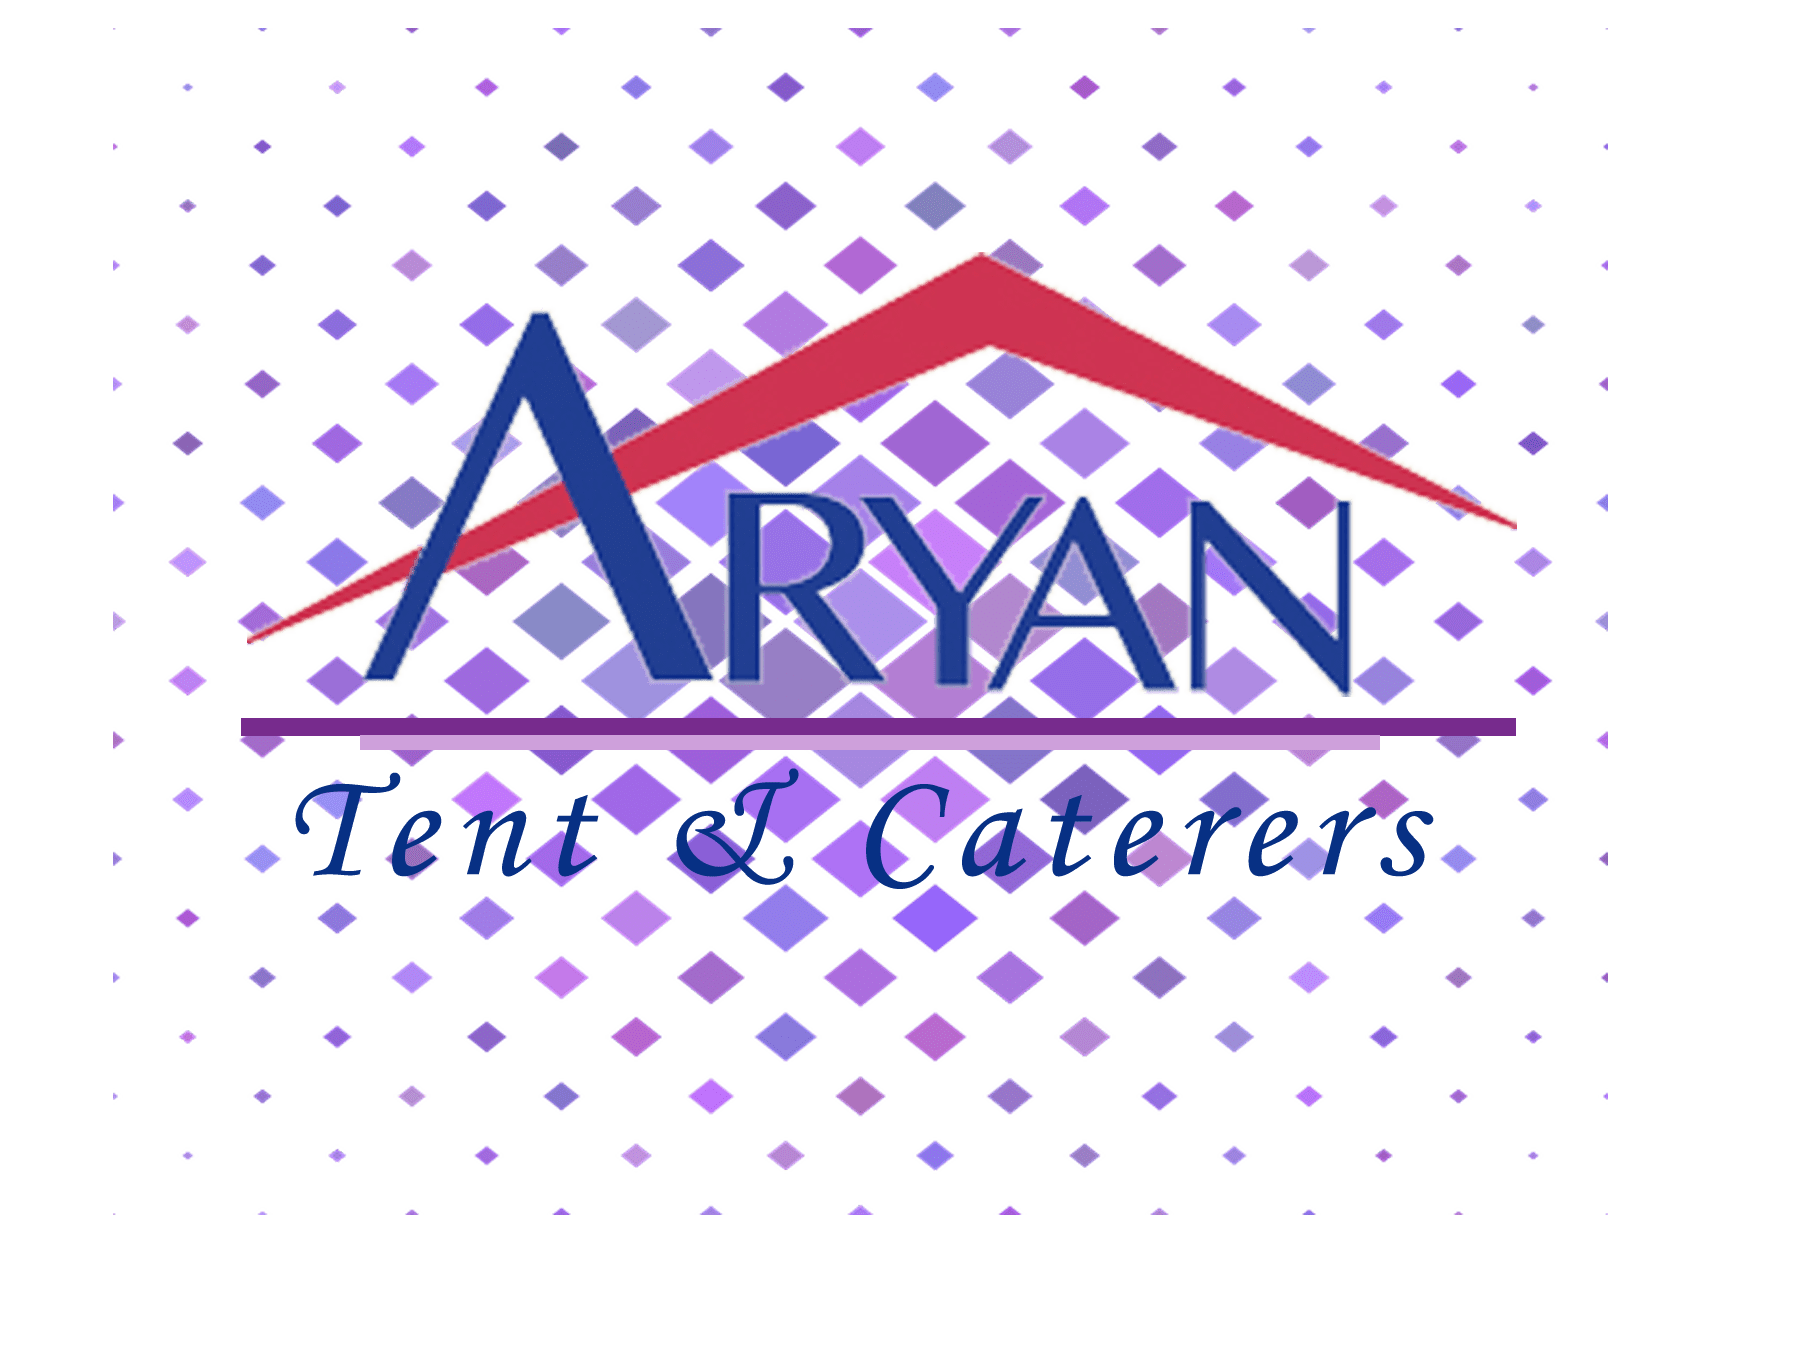 Aryan Tent & Caterers